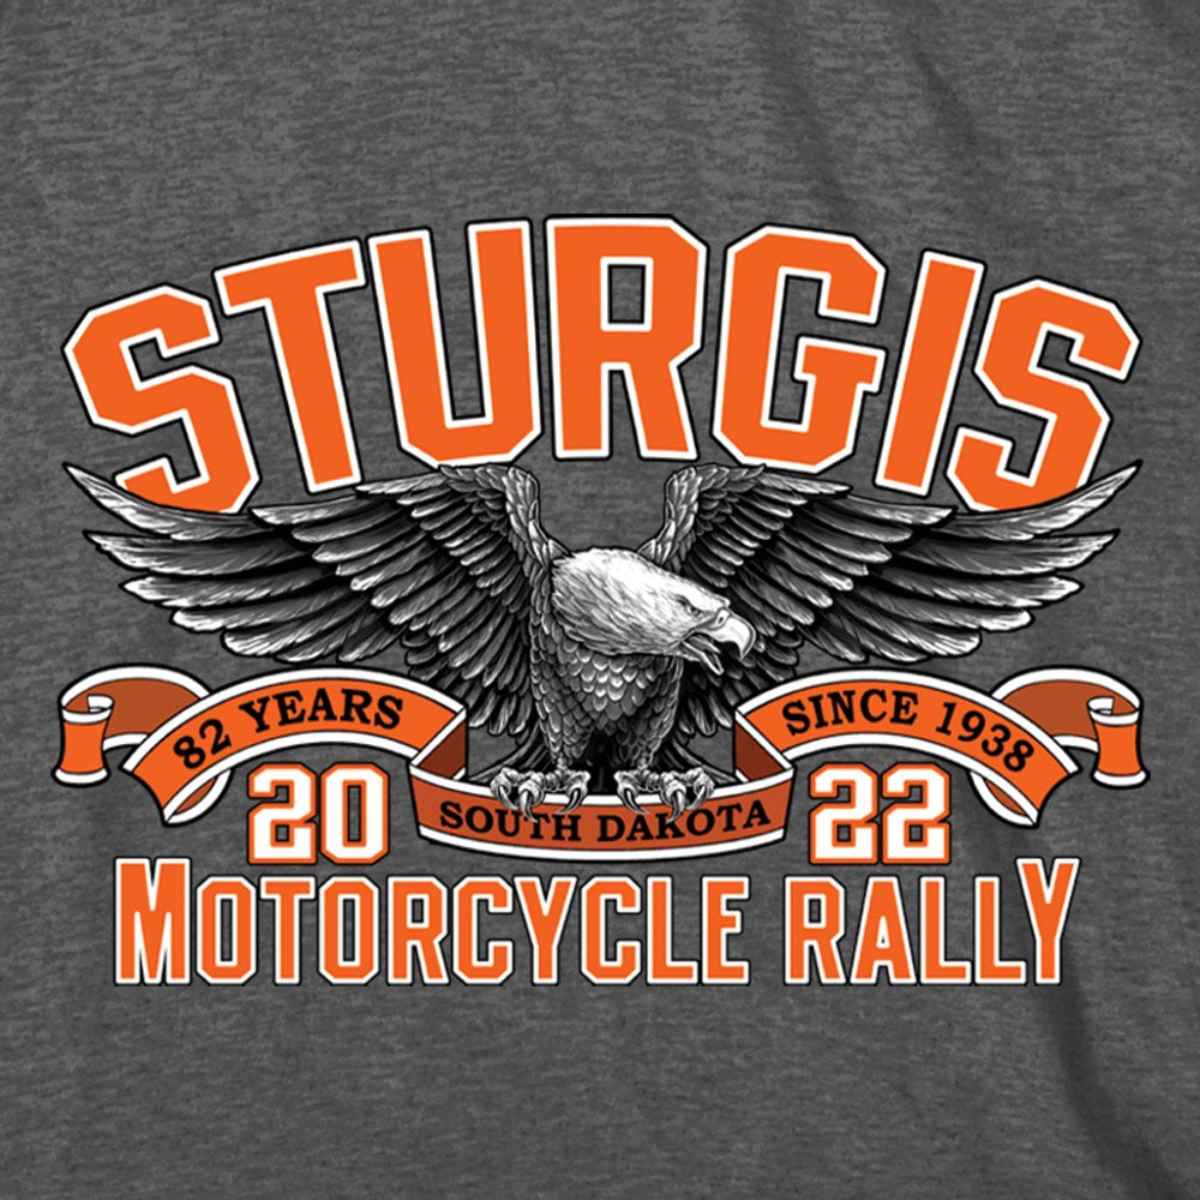 2022 Sturgis Motorcycle Rally SPB1023 Men’s Main Street Photo Heather Charcoal T Shirt